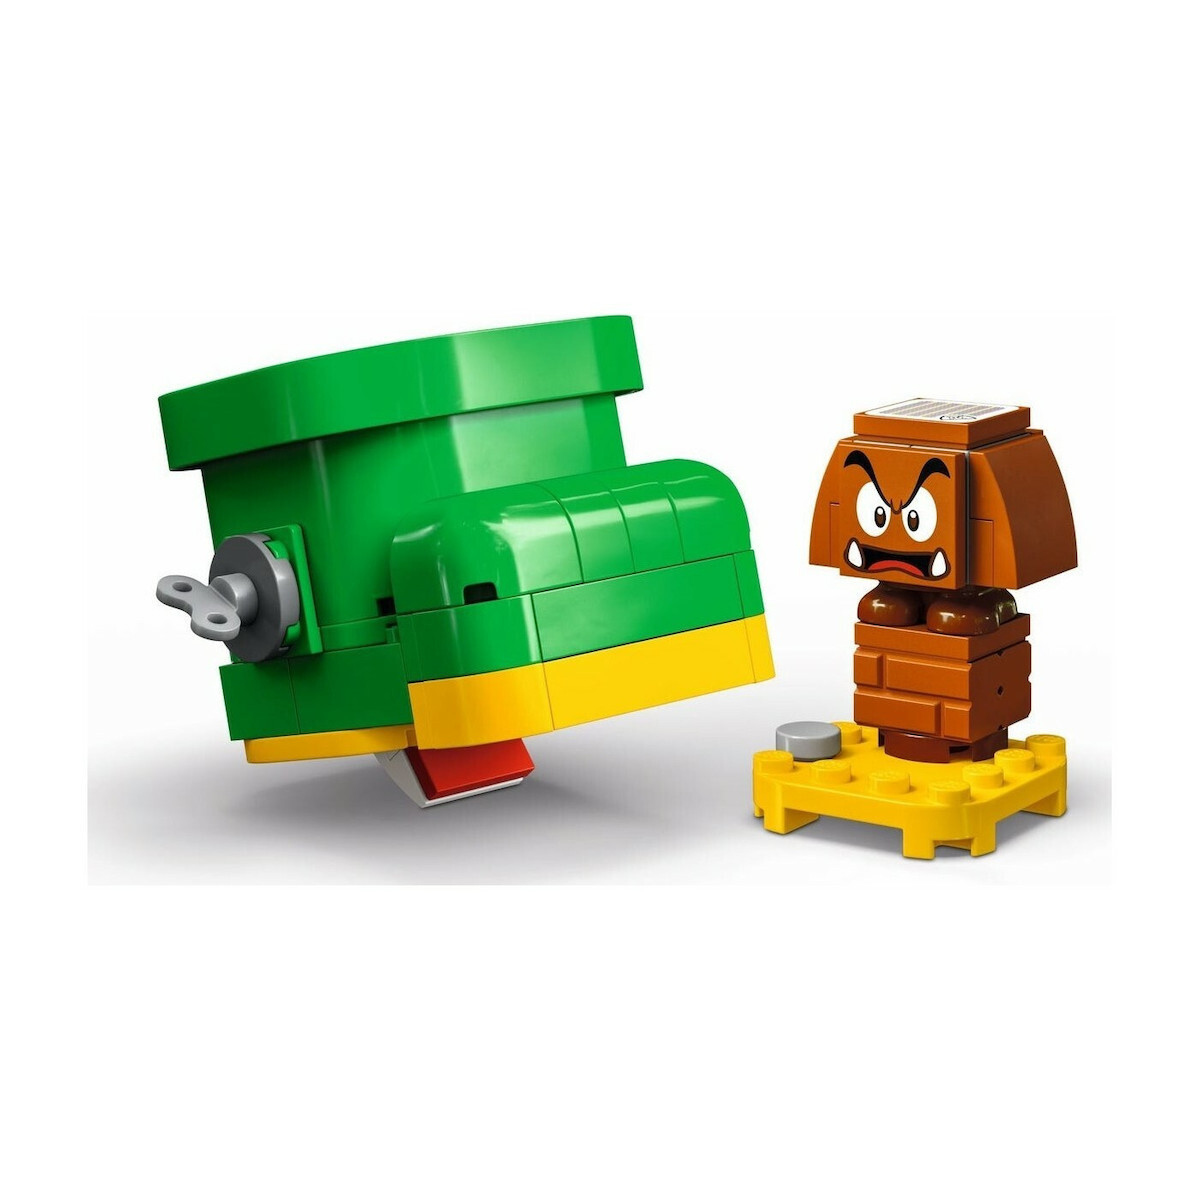 LEGO SUPER MARIO 71404 GOOMBA'S SHOE EXPANSION SET